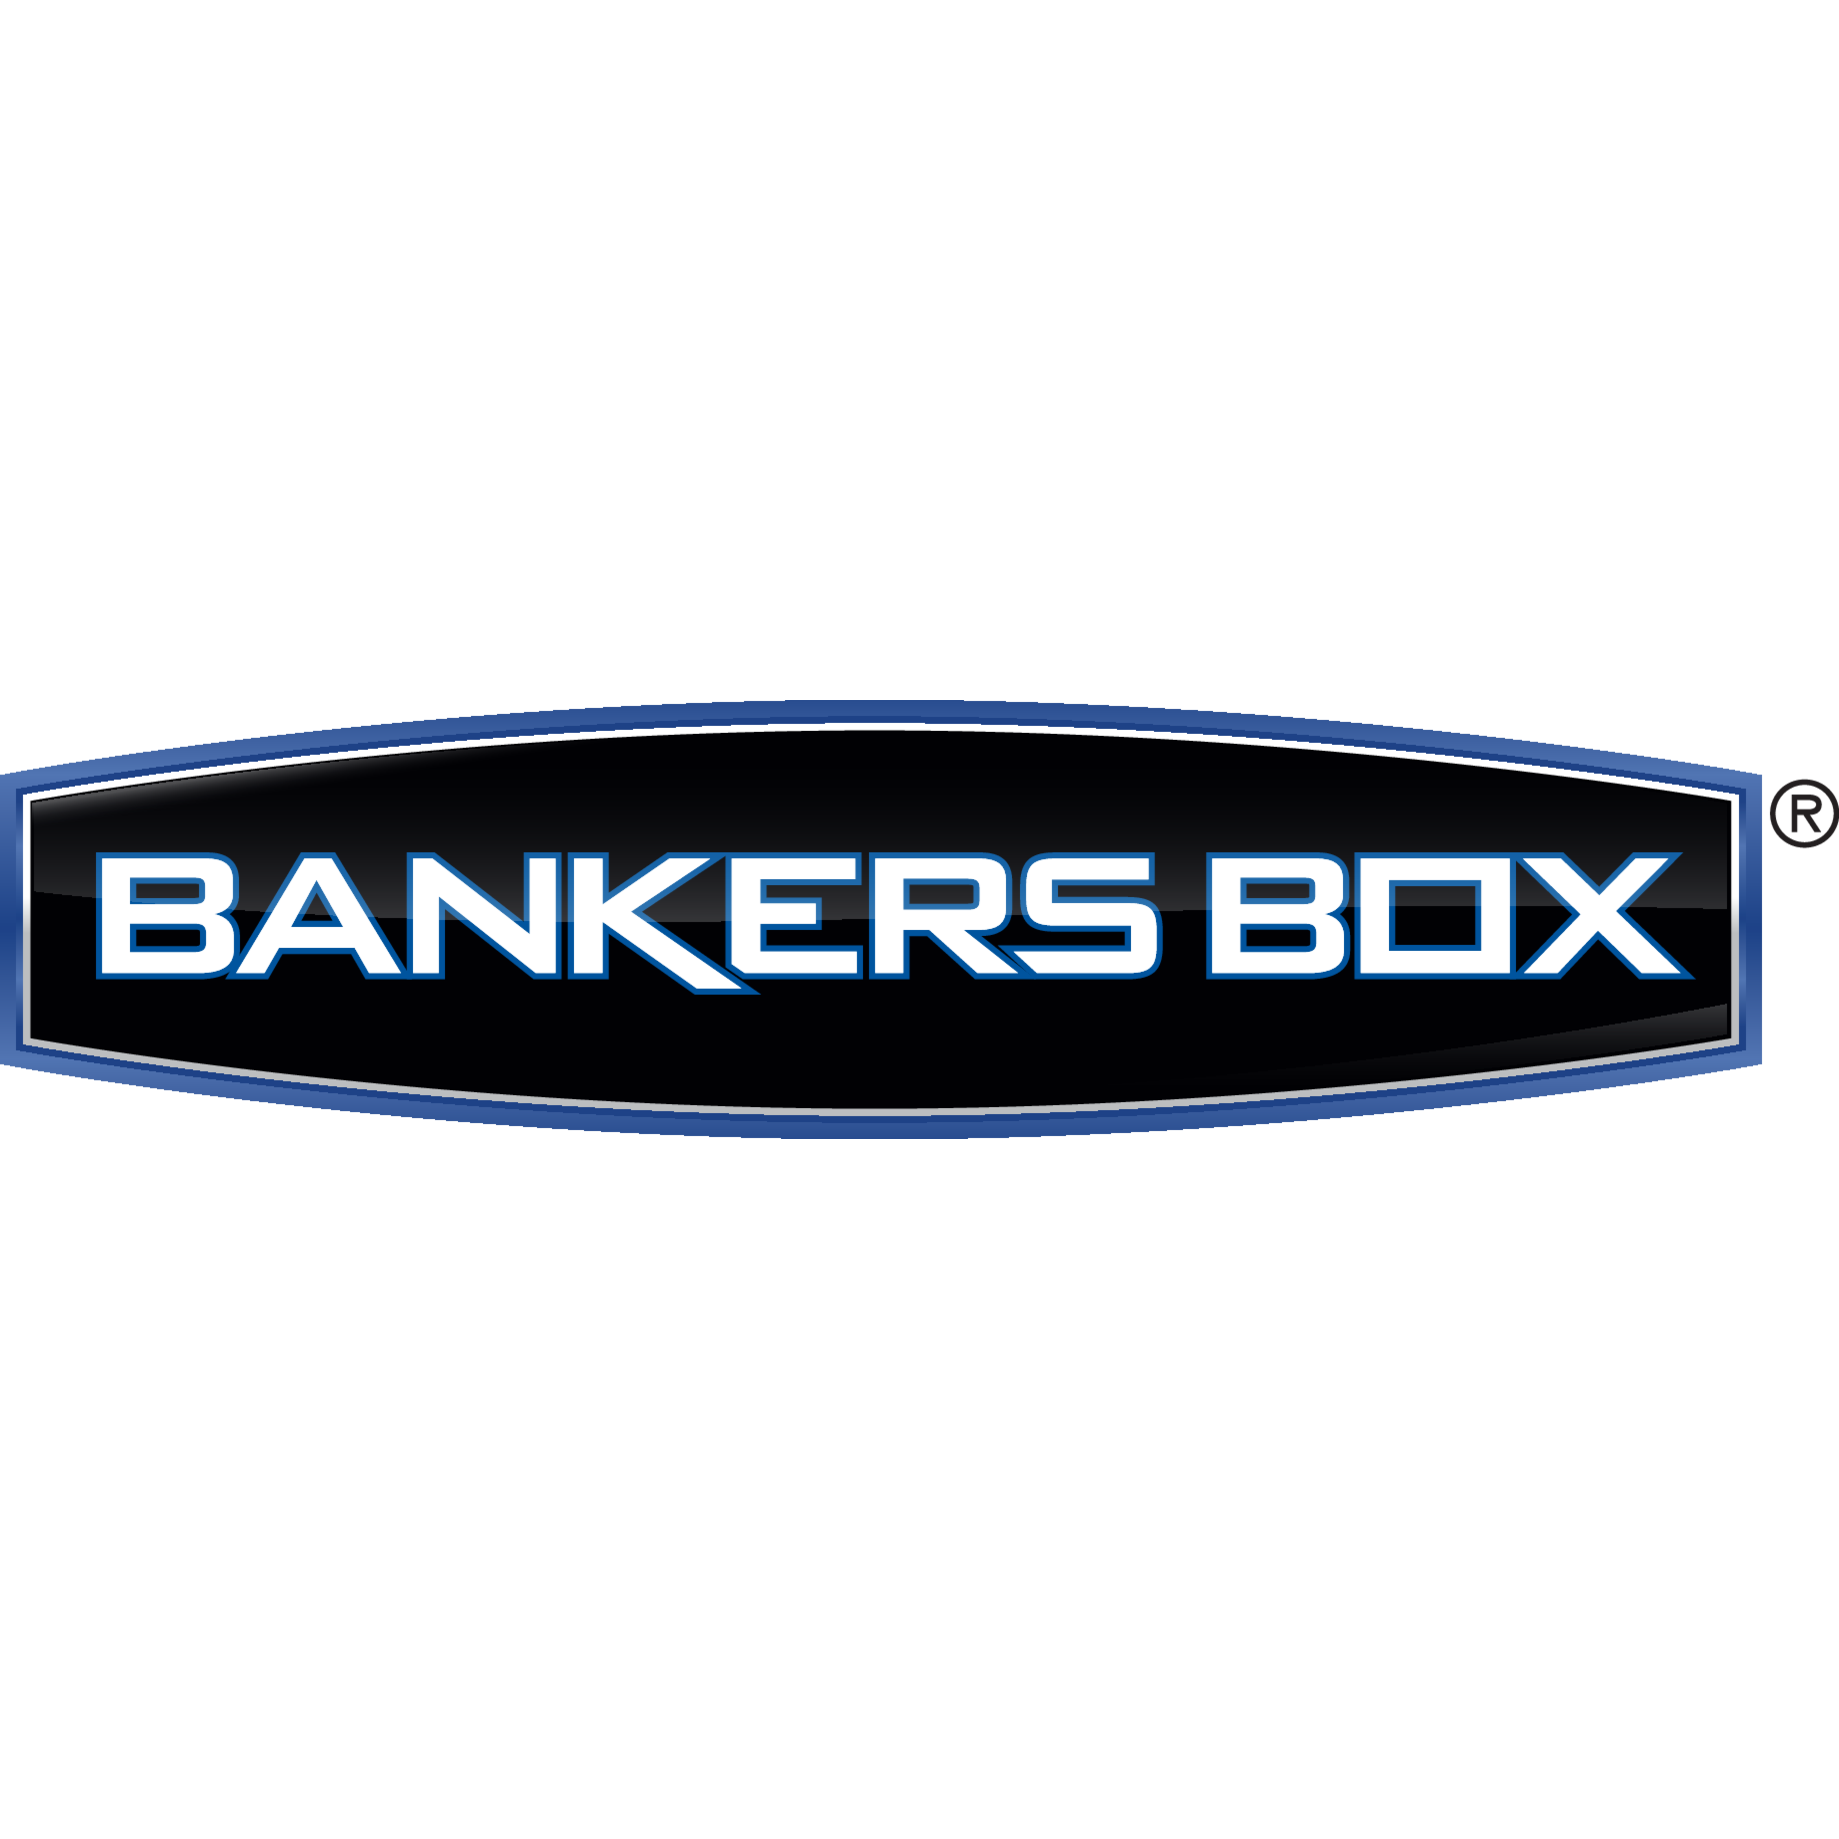 Bankers Box®